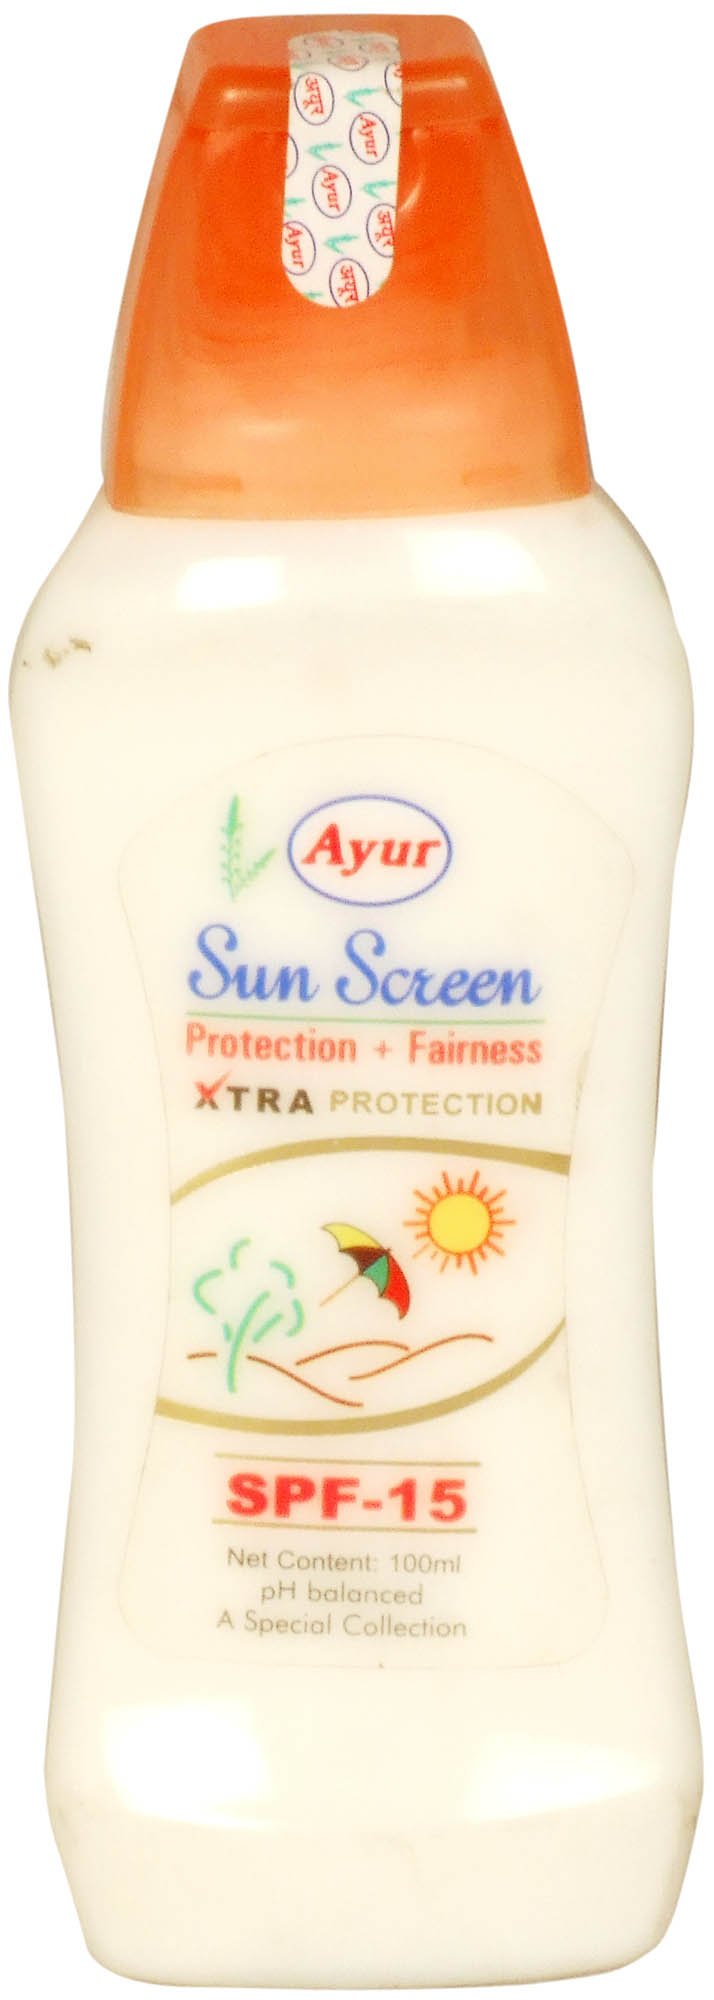 Sun Screen Protection + Fairness (Xtra Protection) - book cover